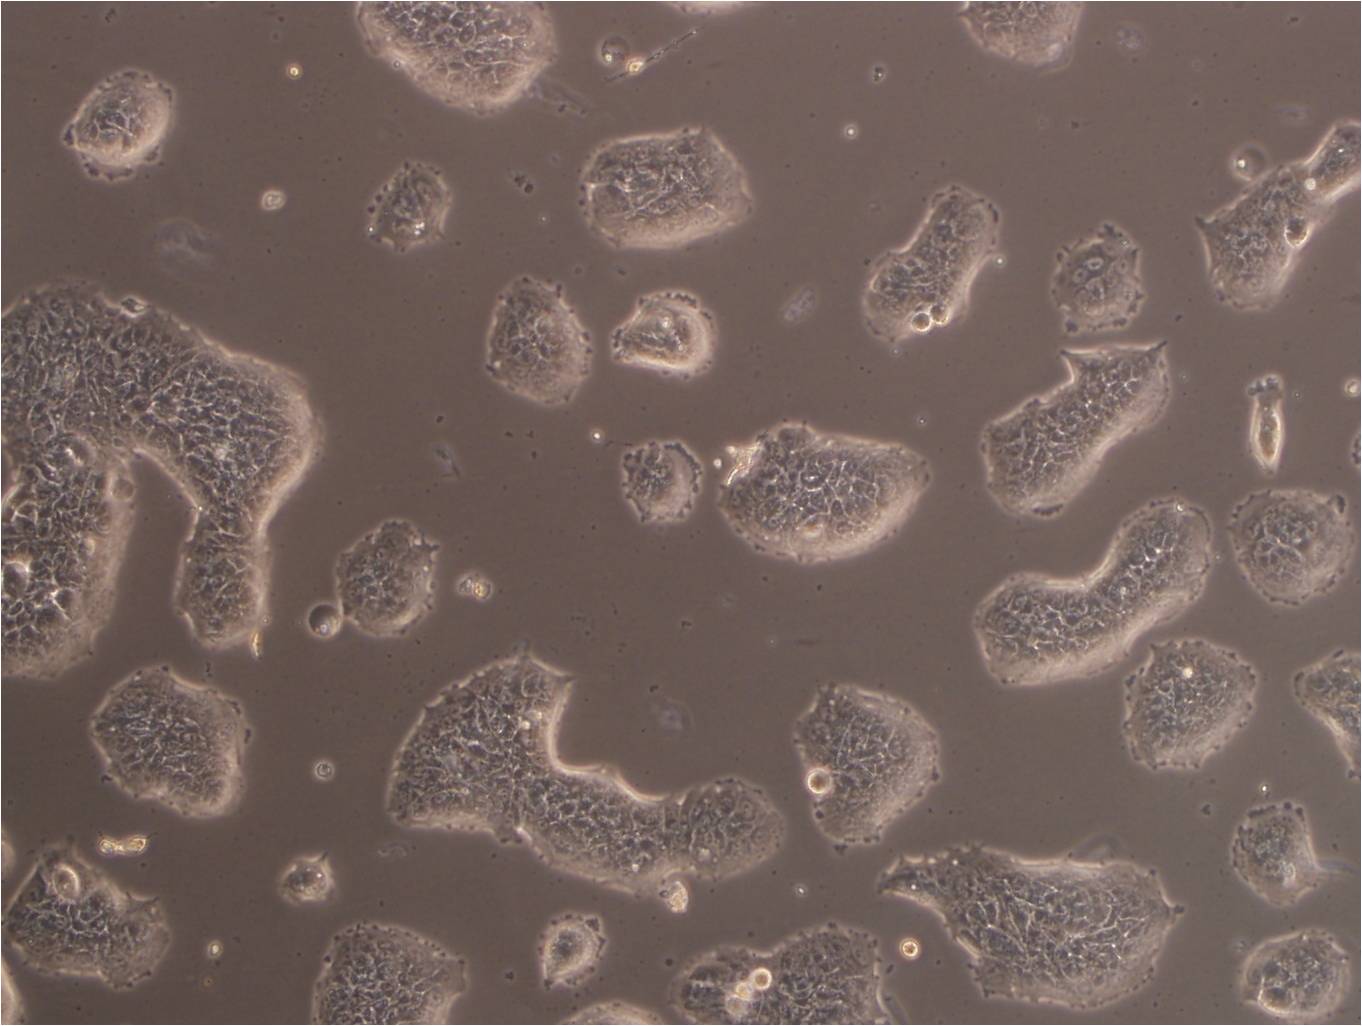 WEHI-164 Cell:小鼠纤维肉瘤细胞系,WEHI-164 Cell